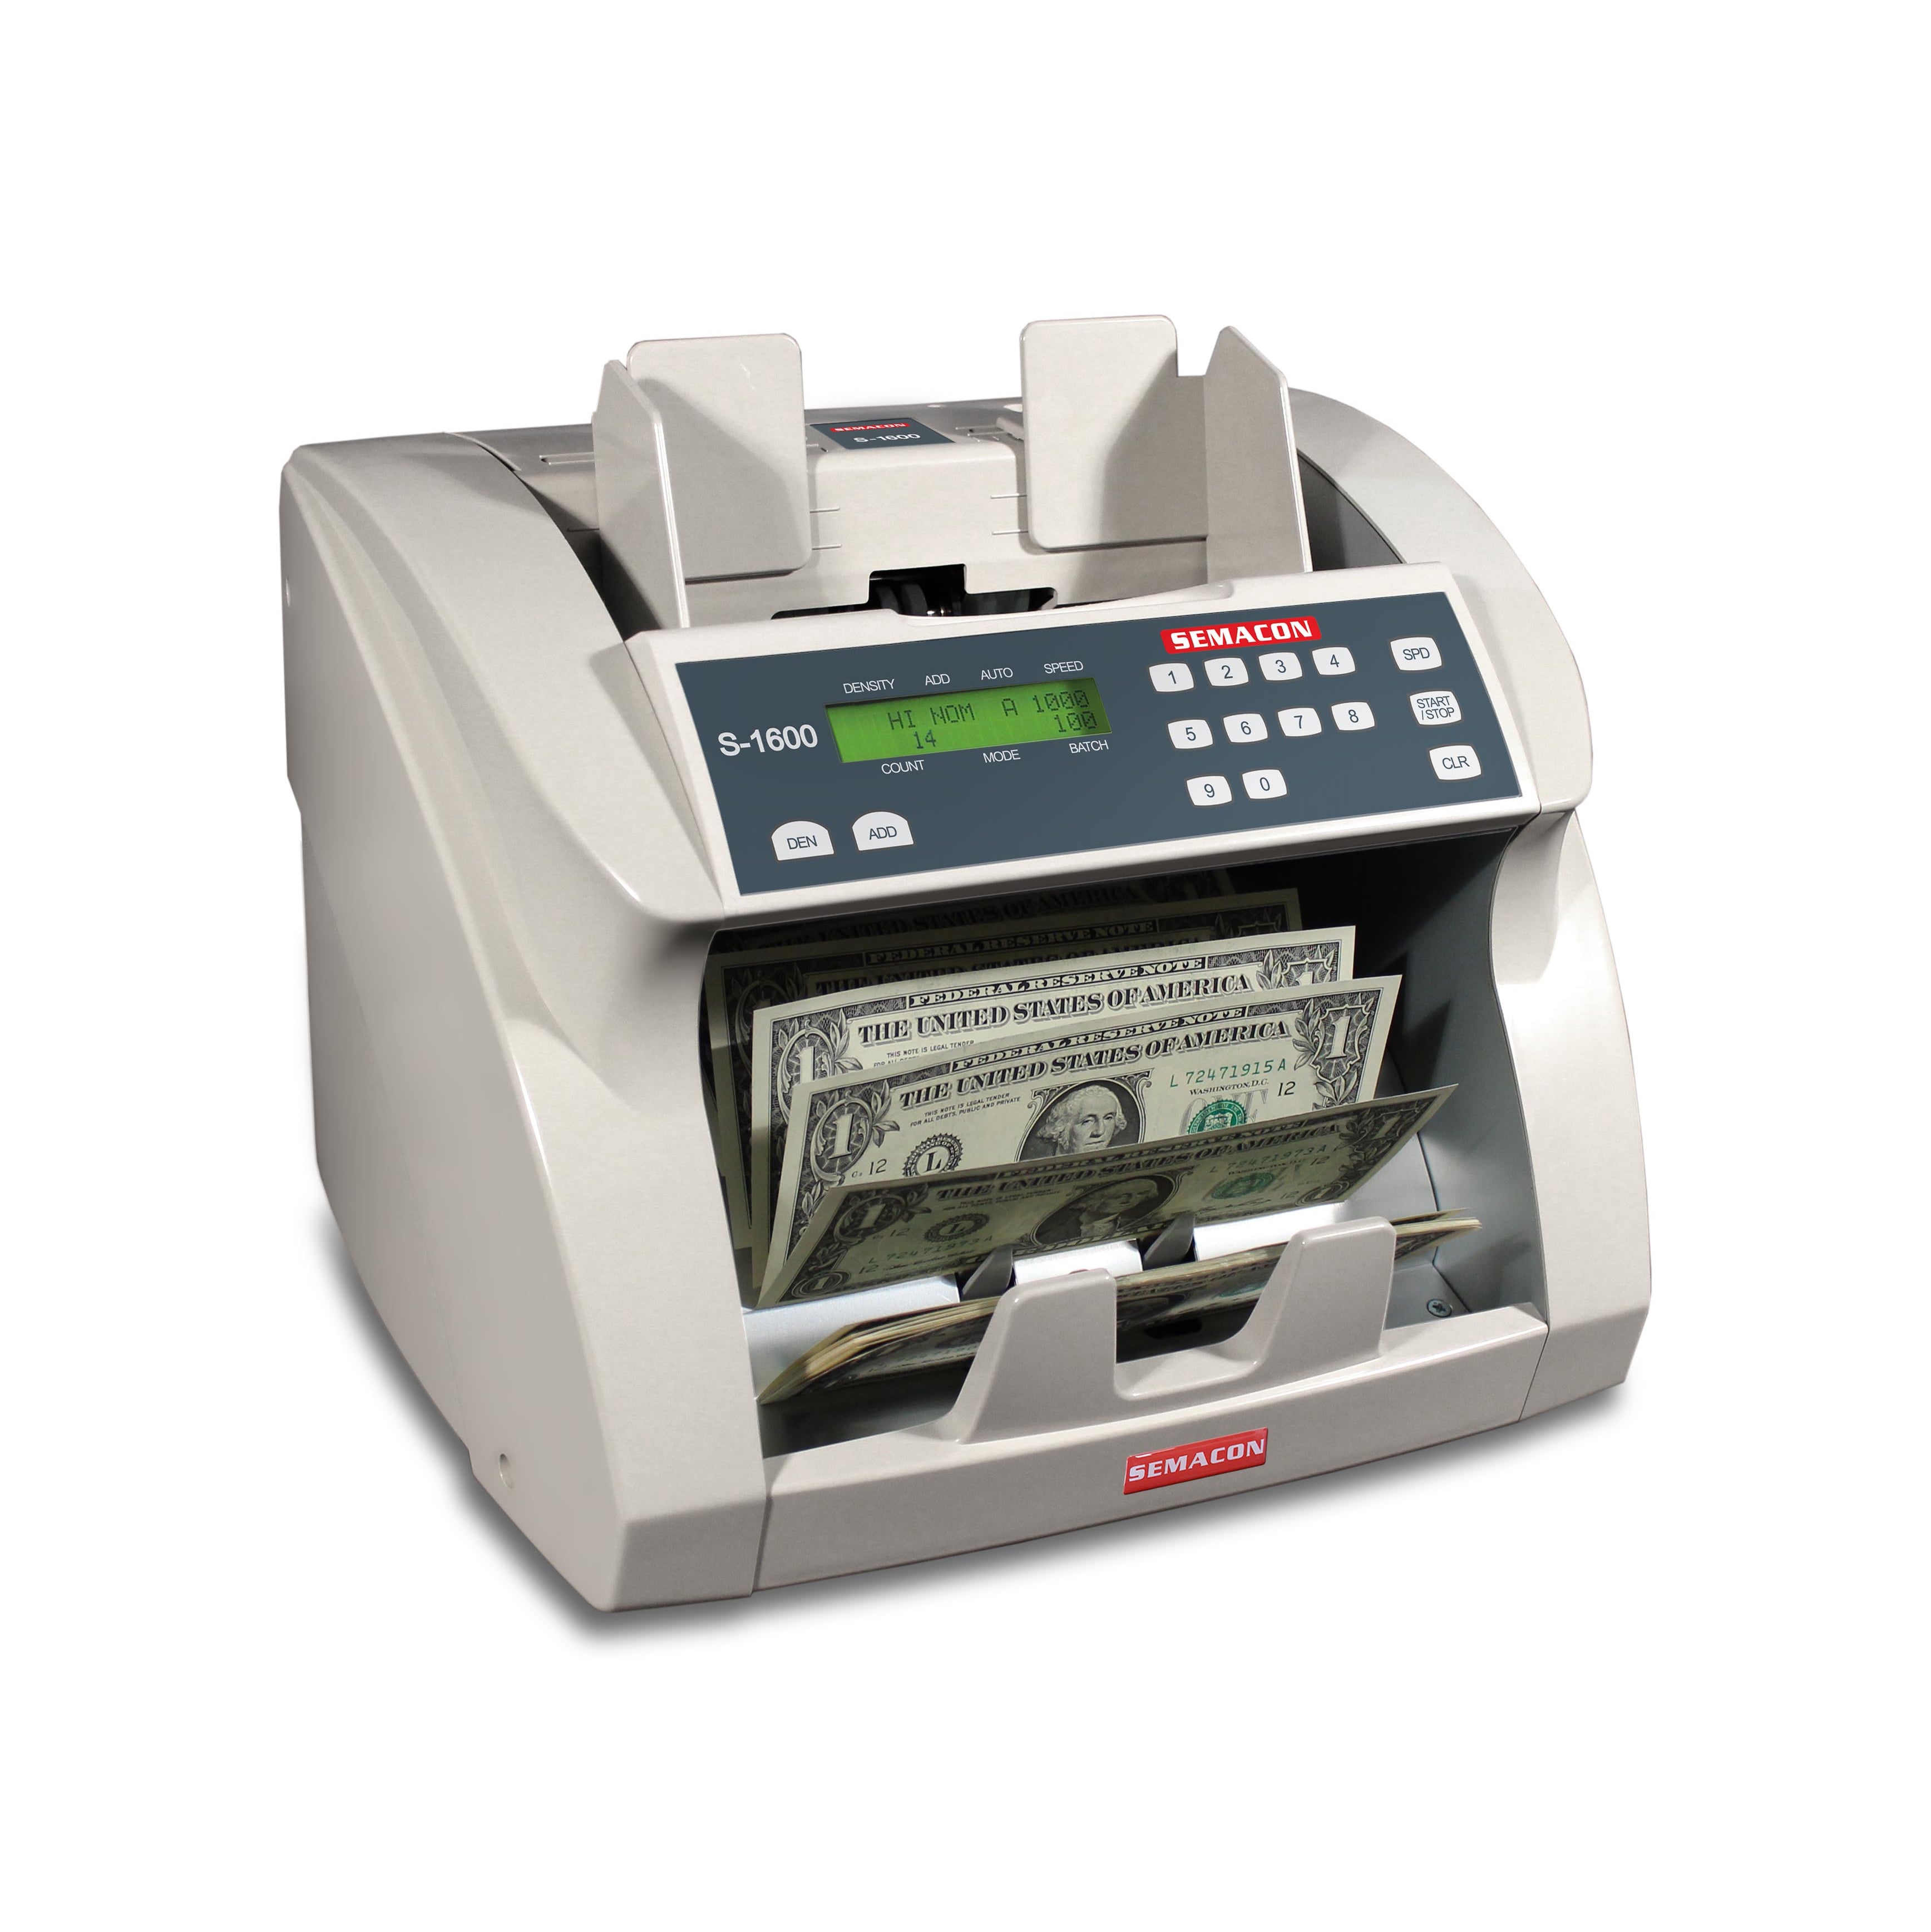 Semacon Premium Bank Grade Currency Counter S-1600 Series Semacon S-1600  - USASafeAndVault